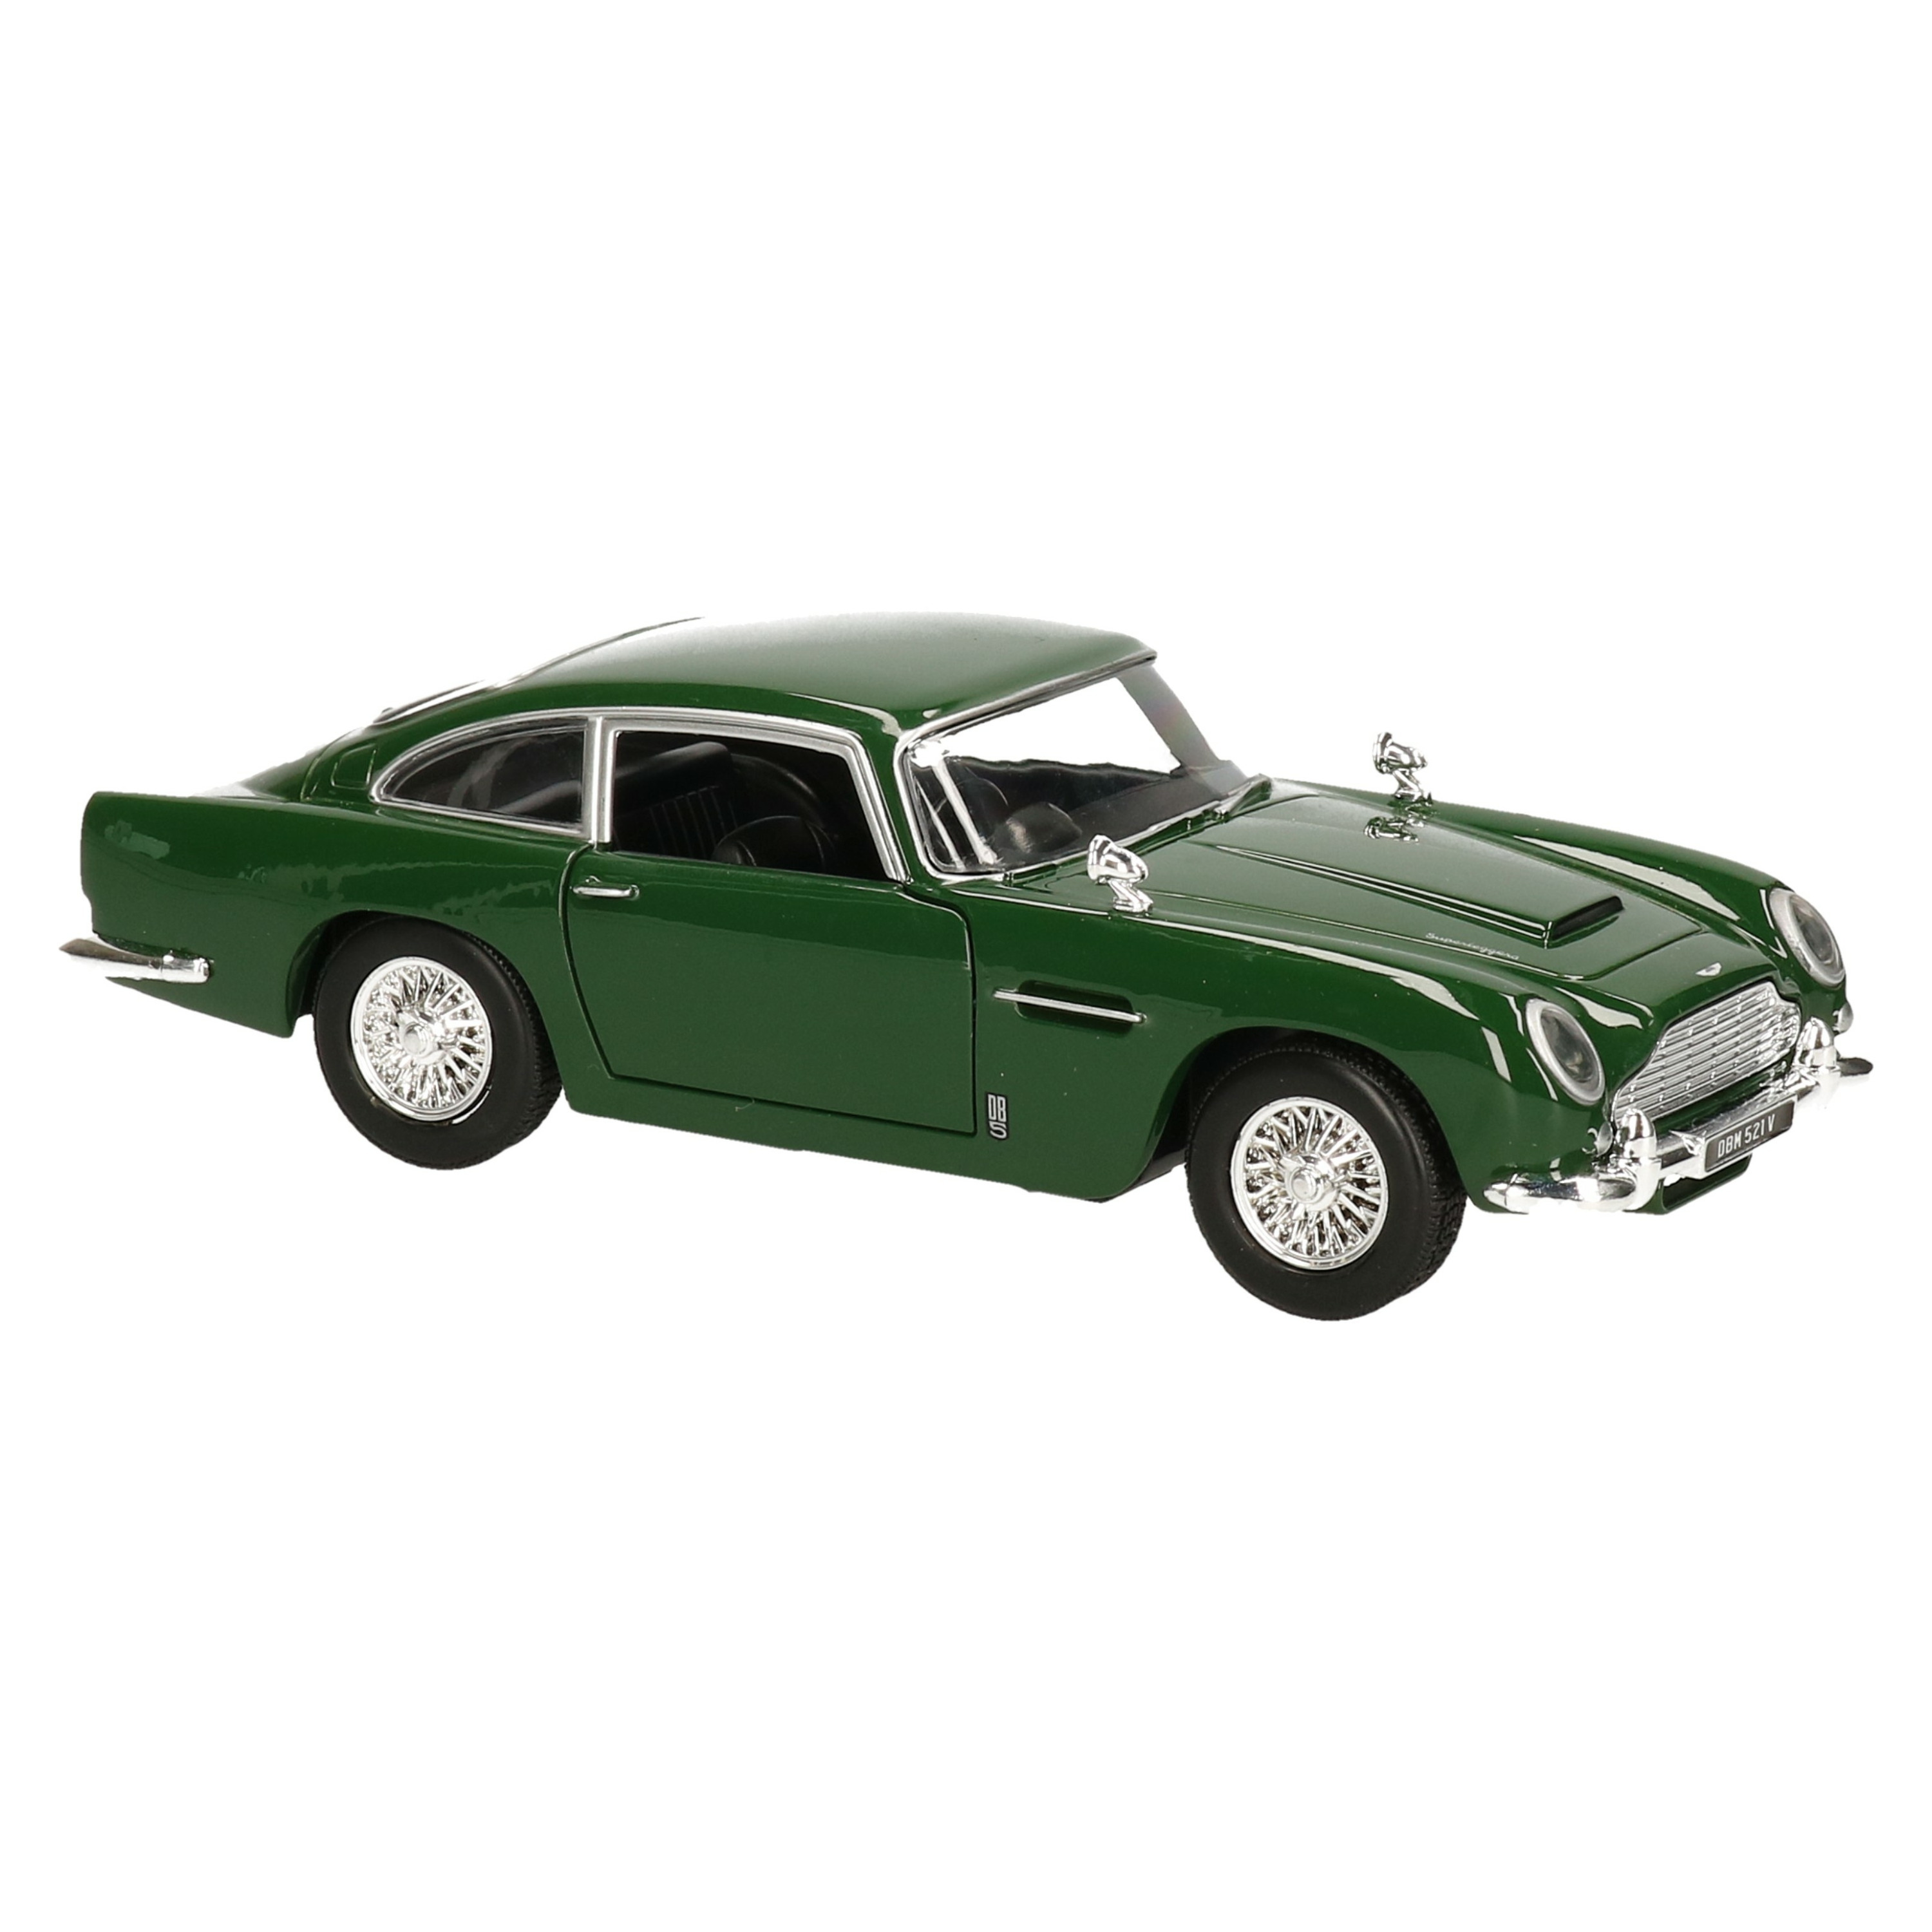 Modelauto-speelgoedauto Aston Martin DB5 1963 schaal 1:24-19 x 7 x 5 cm